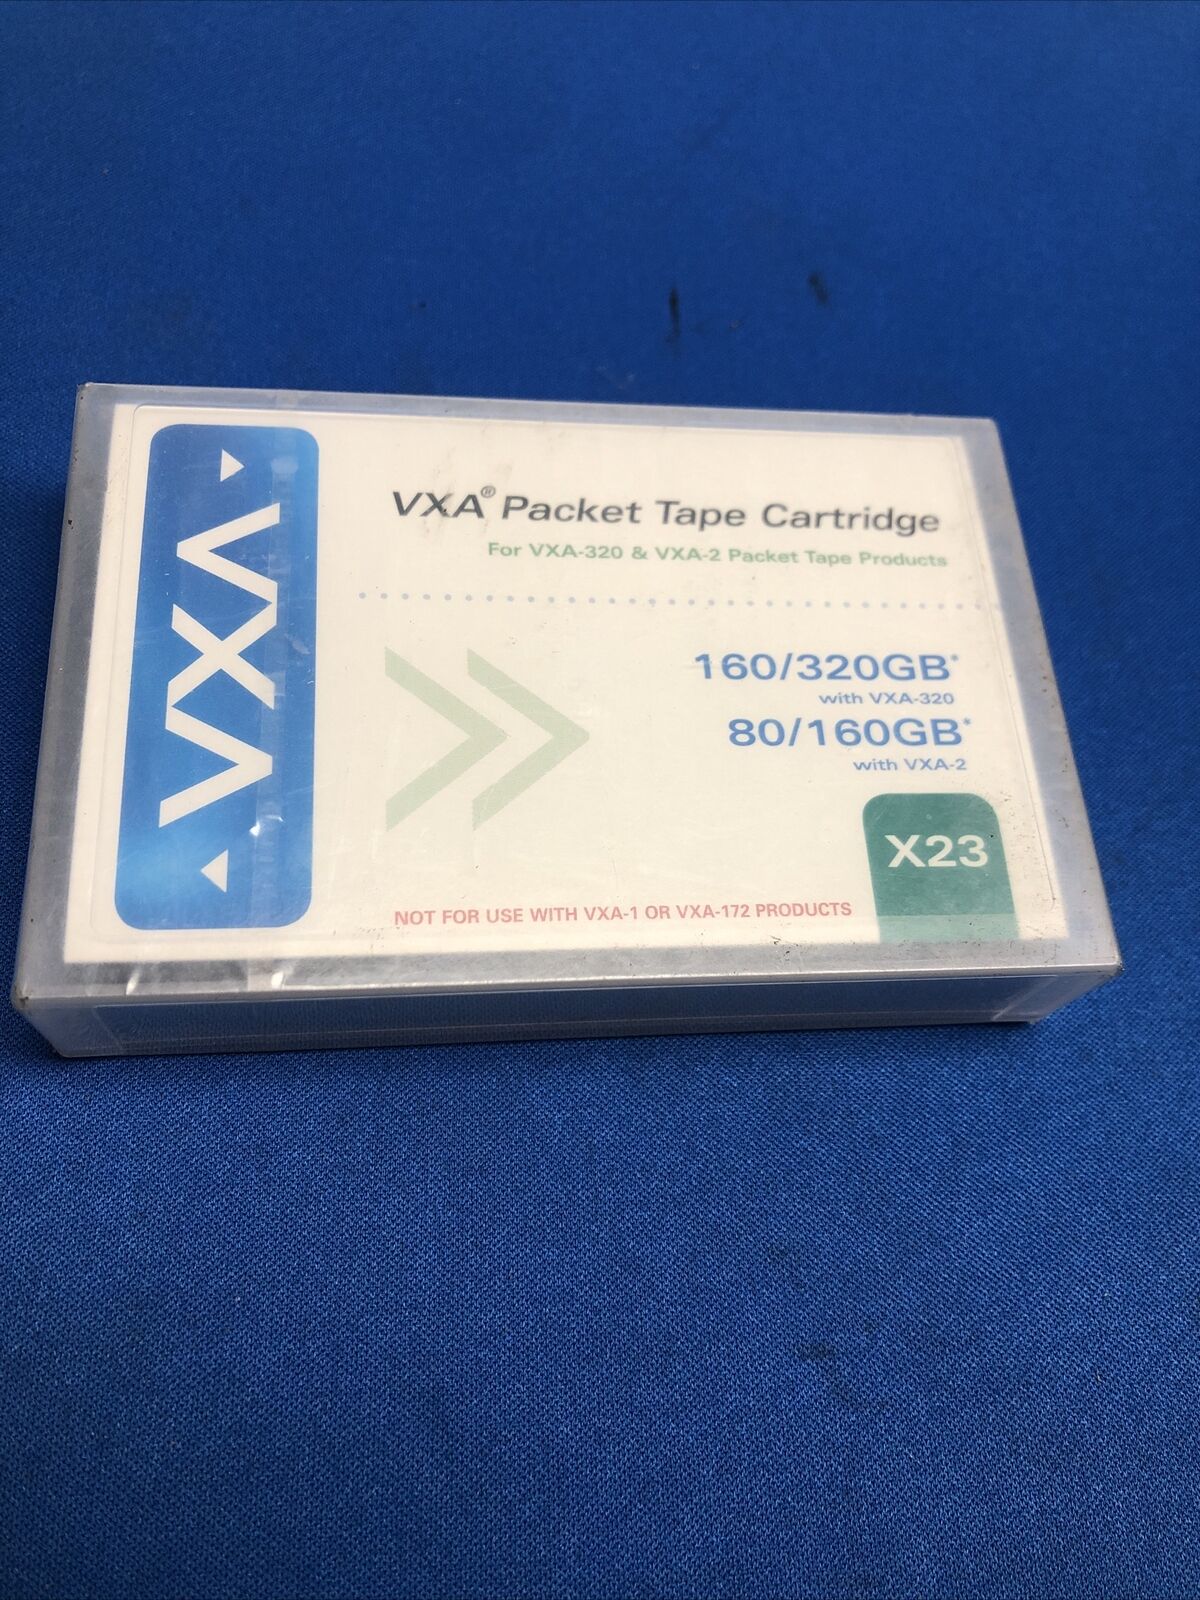 EXABYTE VXA PACKET TAPE CARTRIDGE 80/160GB -160/320GB  X23